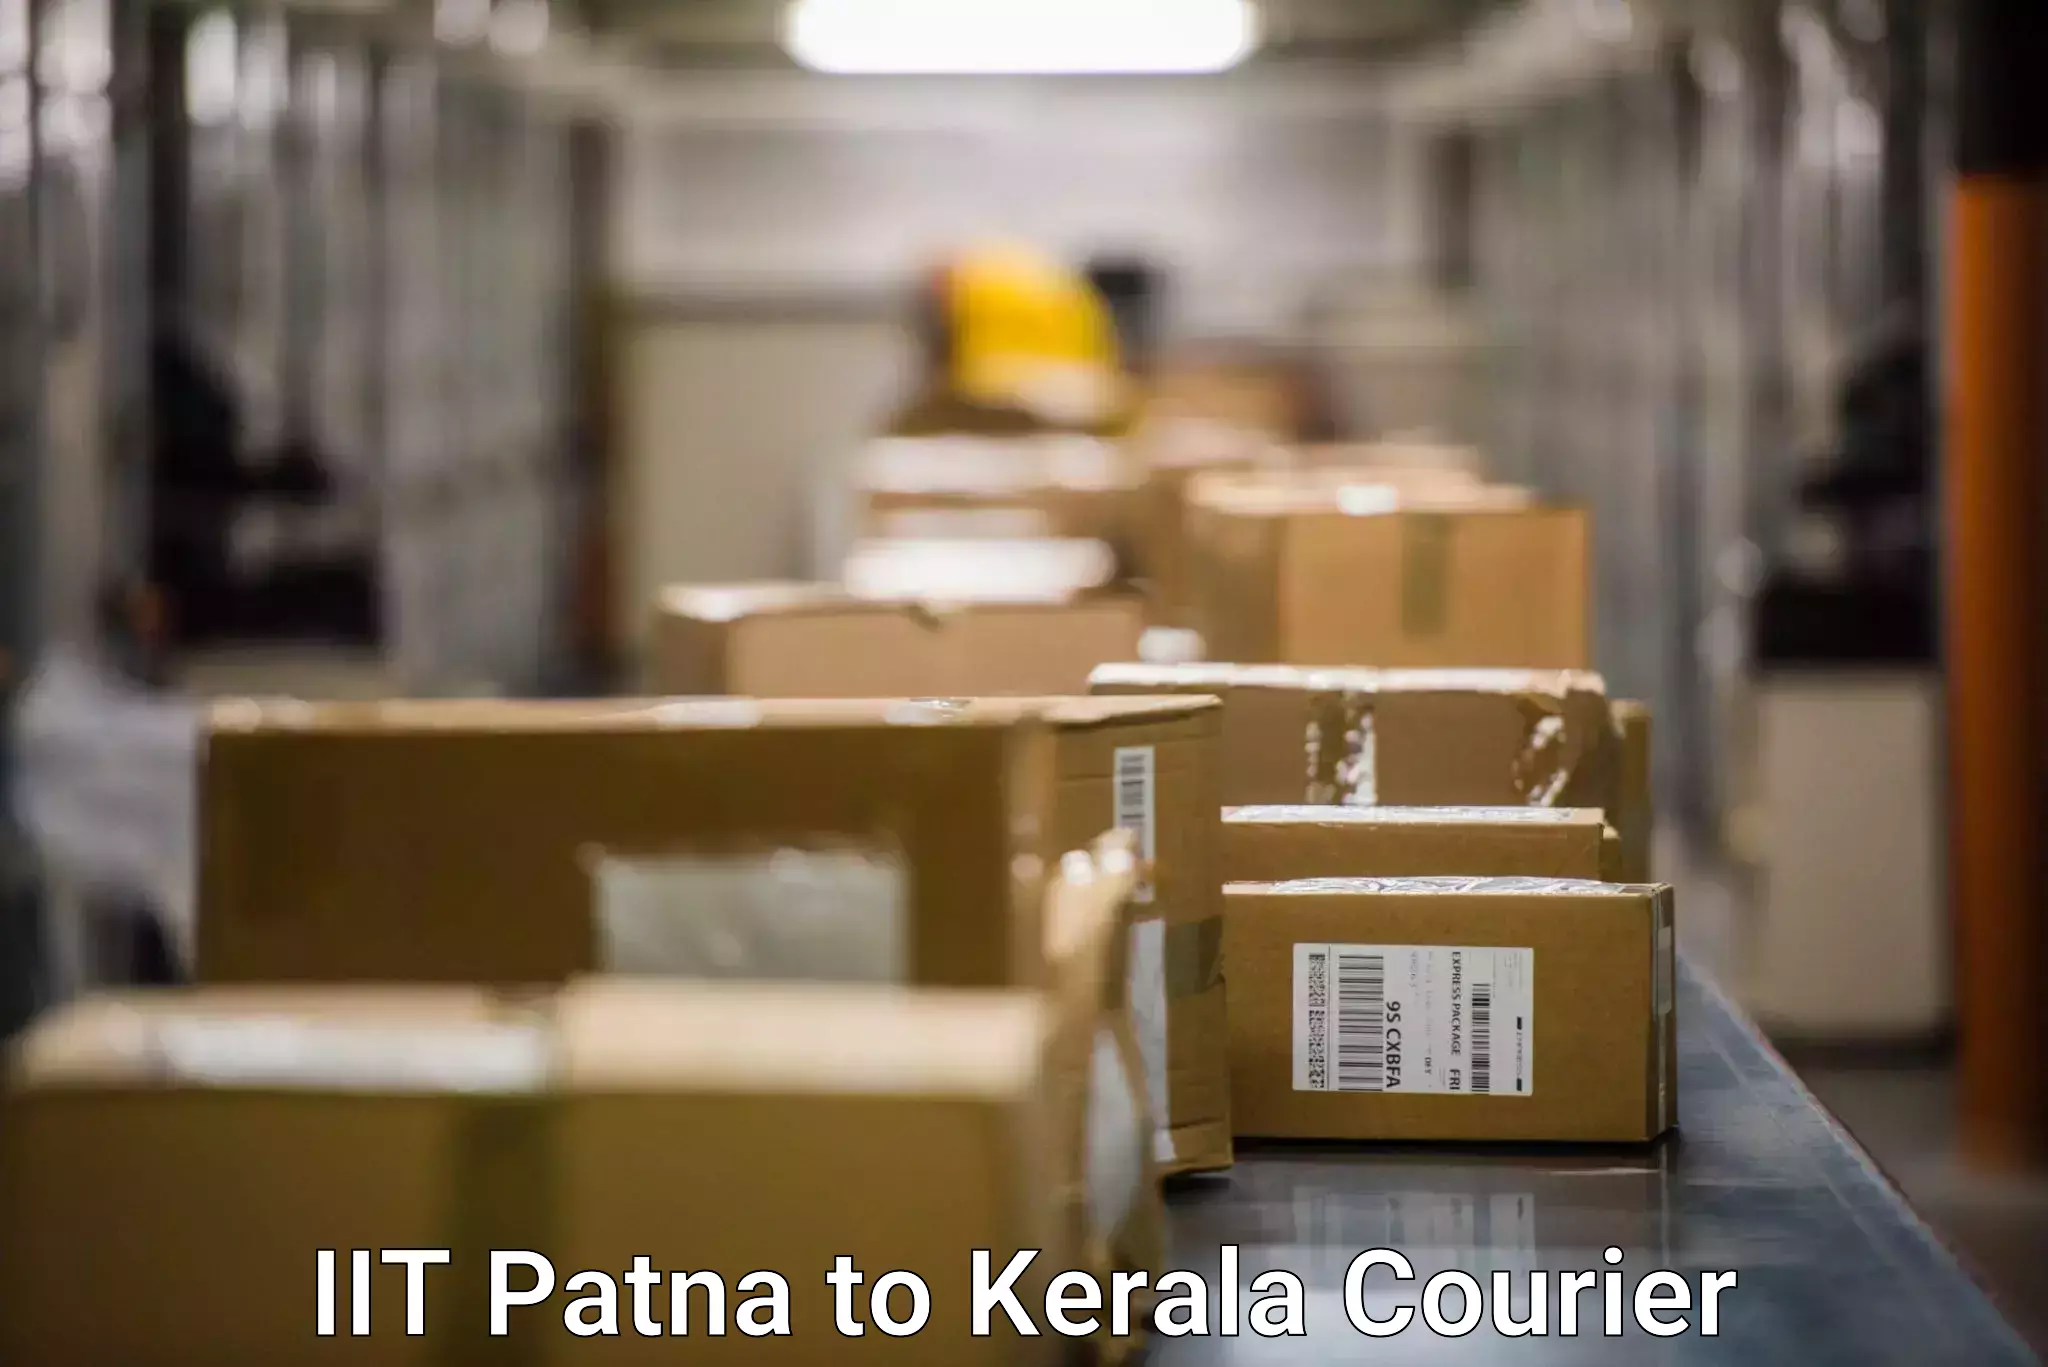 Express courier capabilities IIT Patna to Kerala